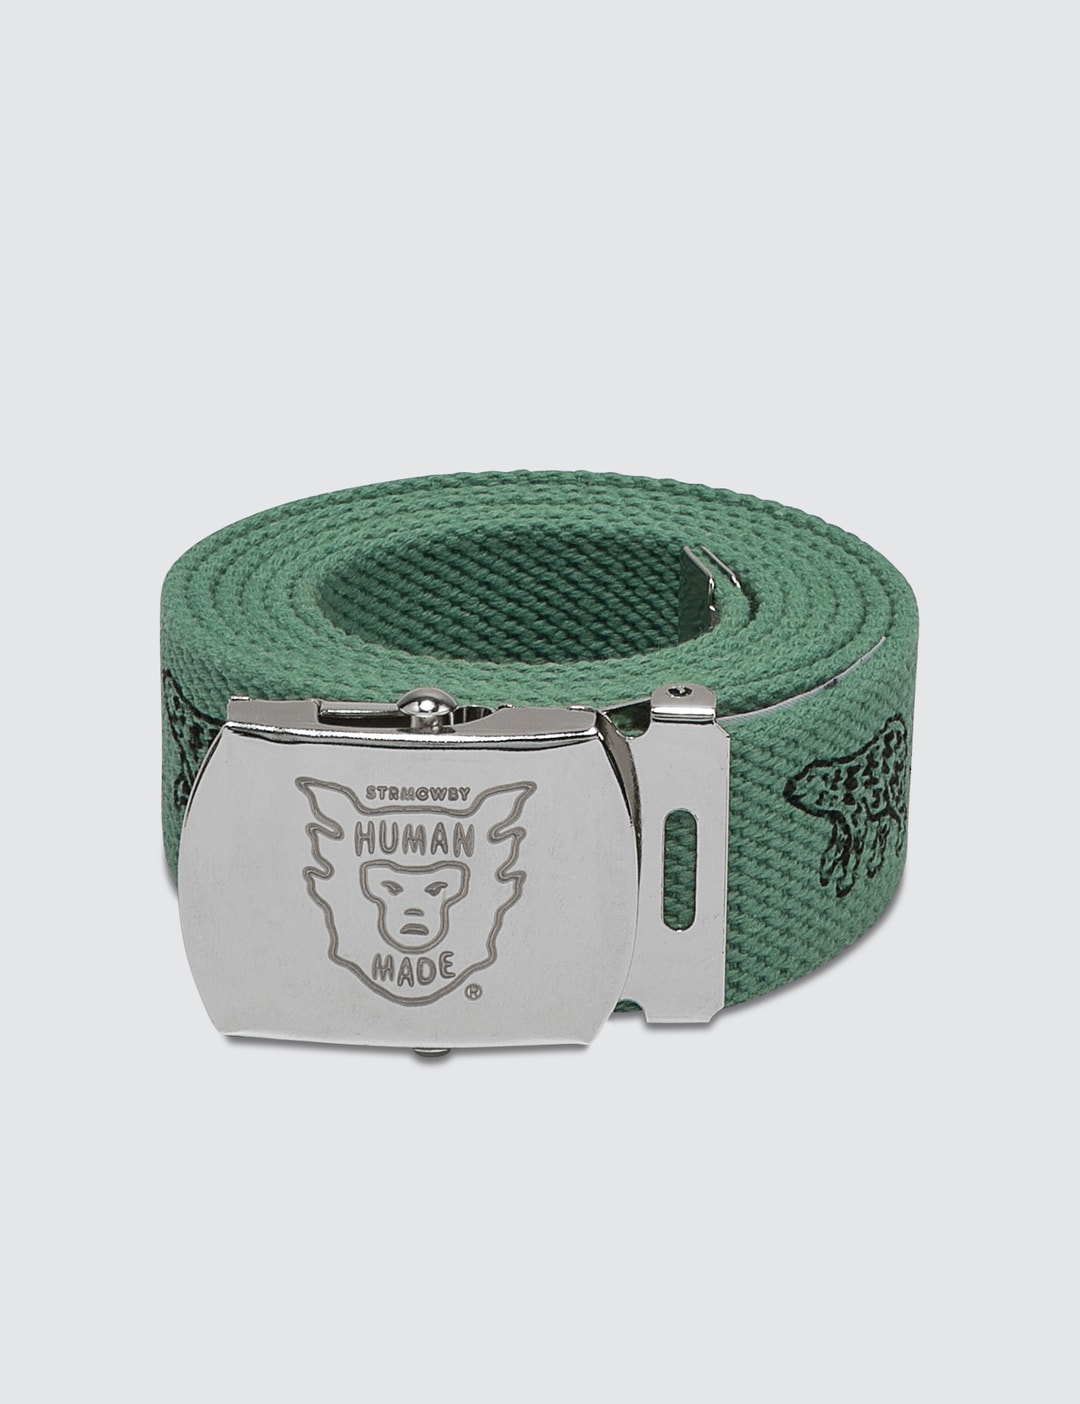 Brand new Human Made Belt One Size $150! #FutureFashion401